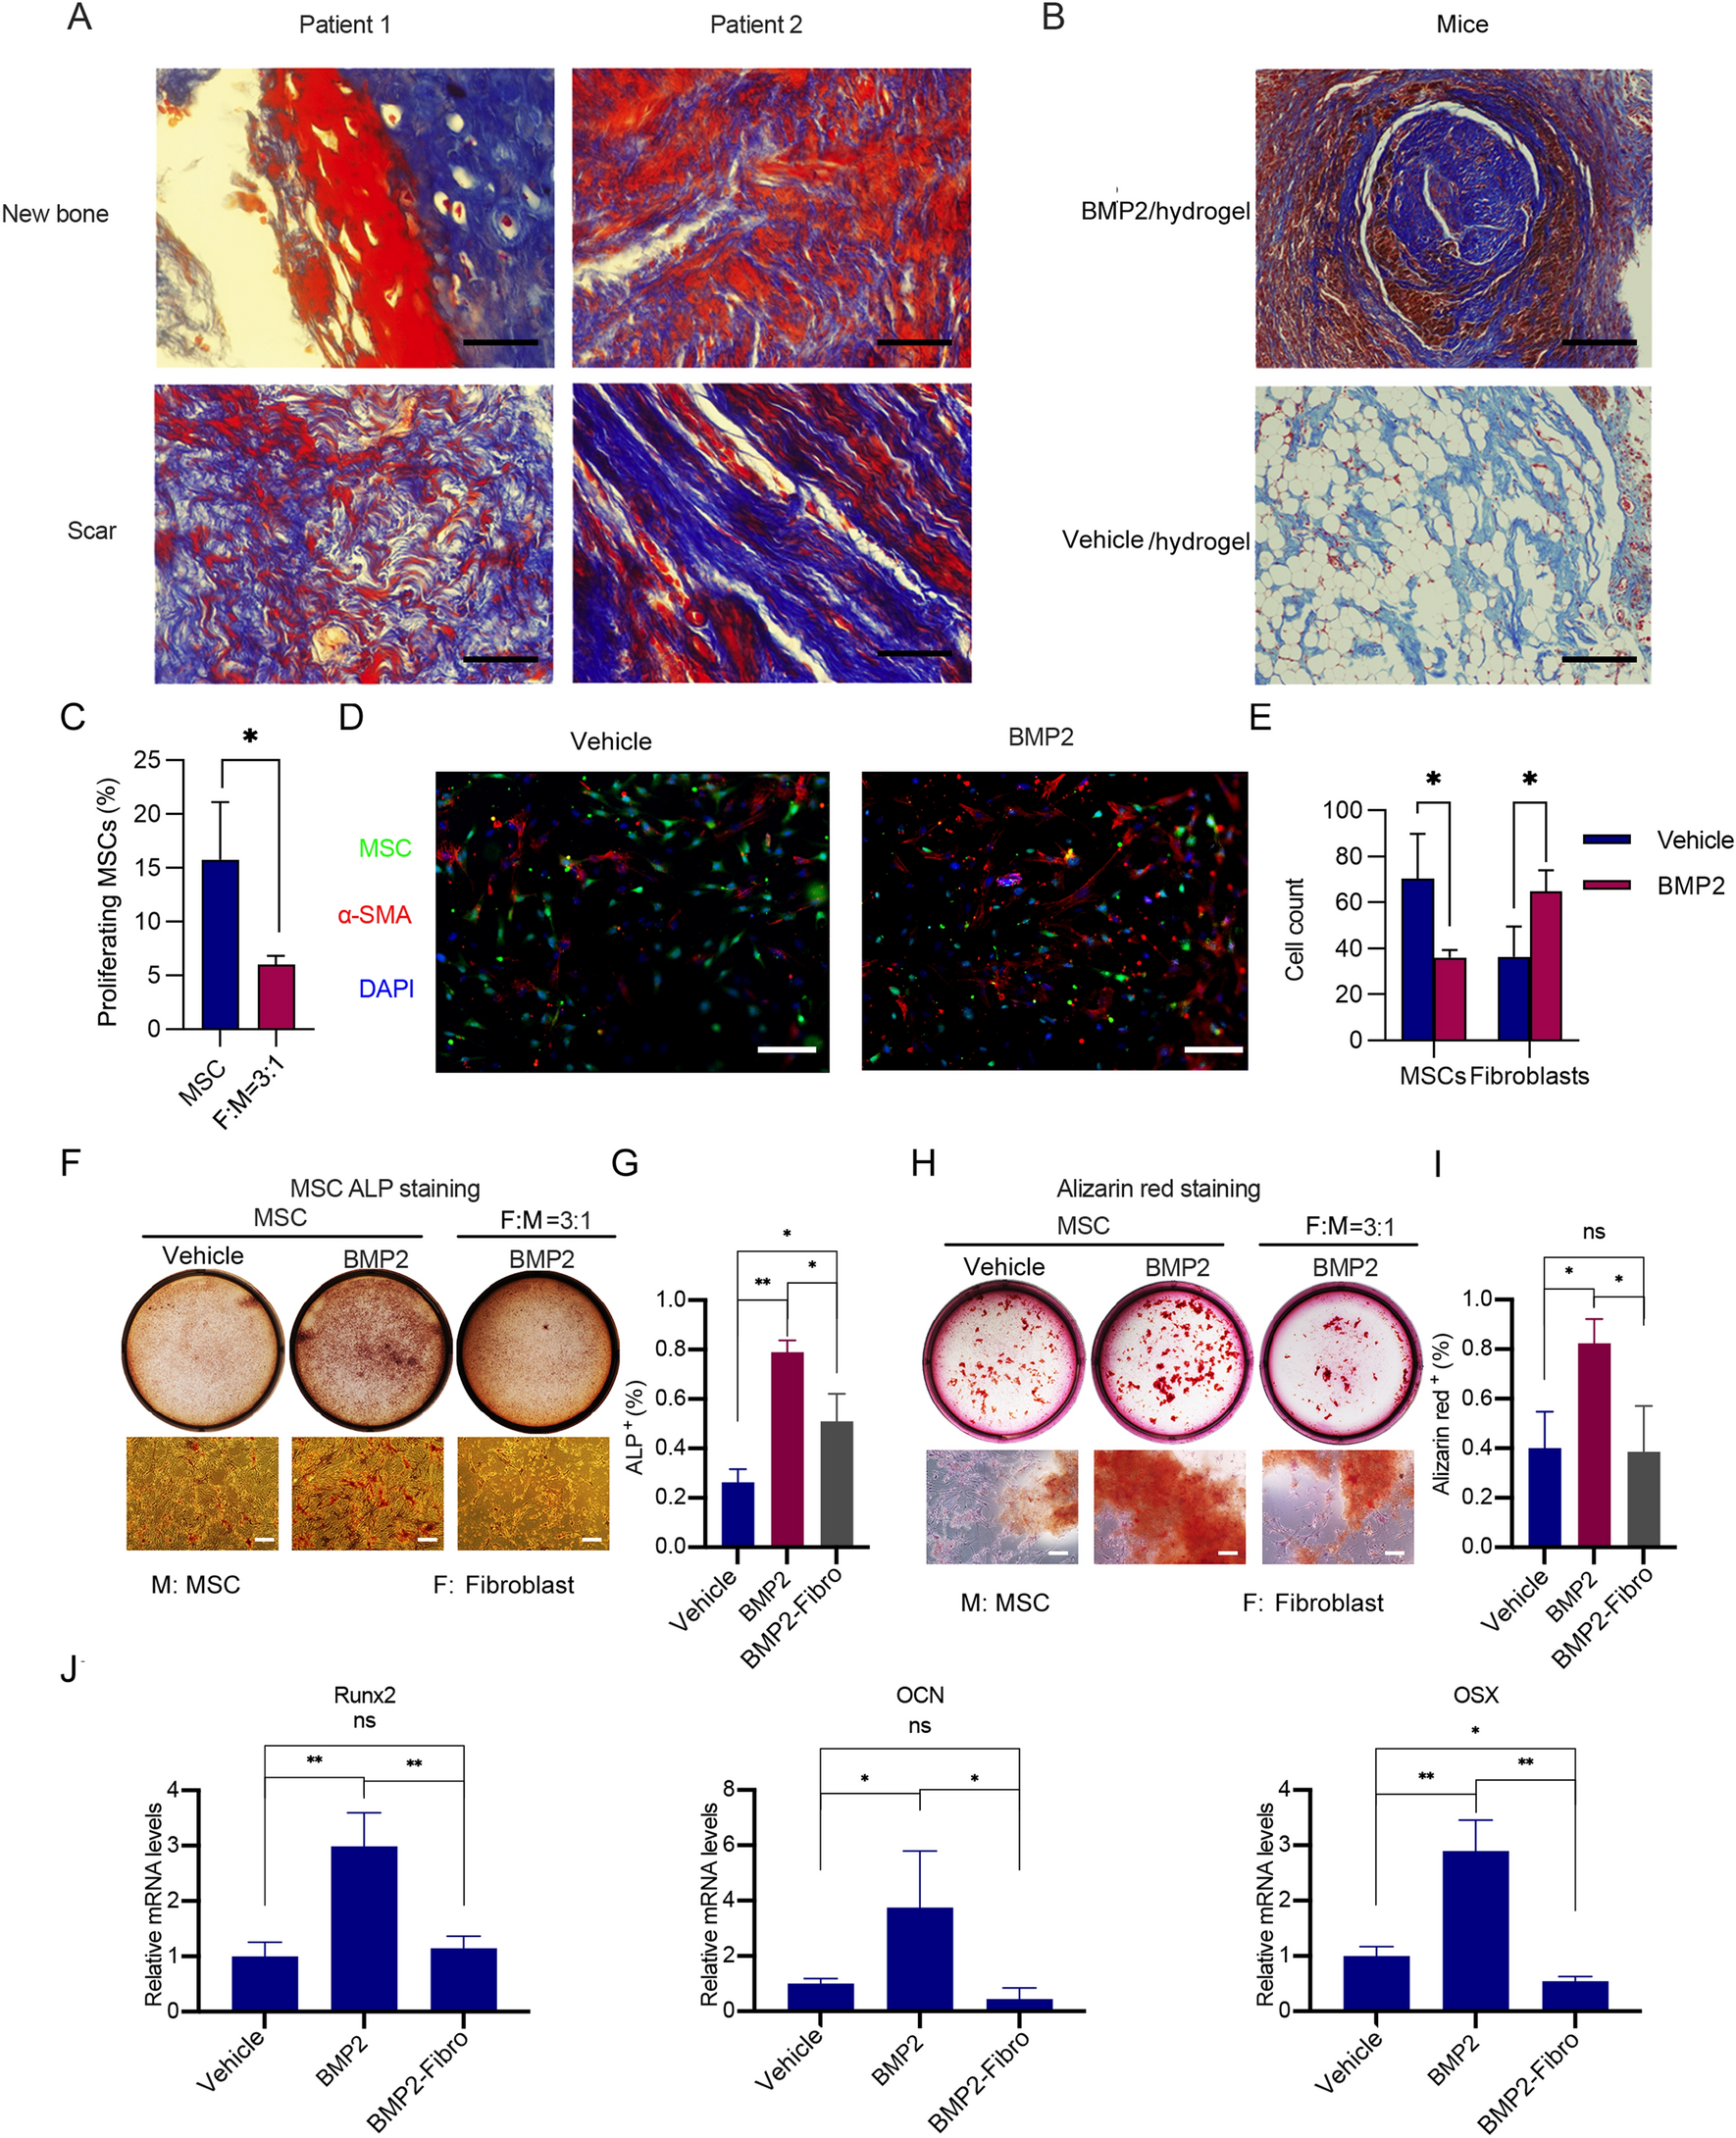 Fibroblasts inhibit osteogenesis by regulating nuclear-cytoplasmic shuttling of YAP in mesenchymal stem cells and secreting DKK1